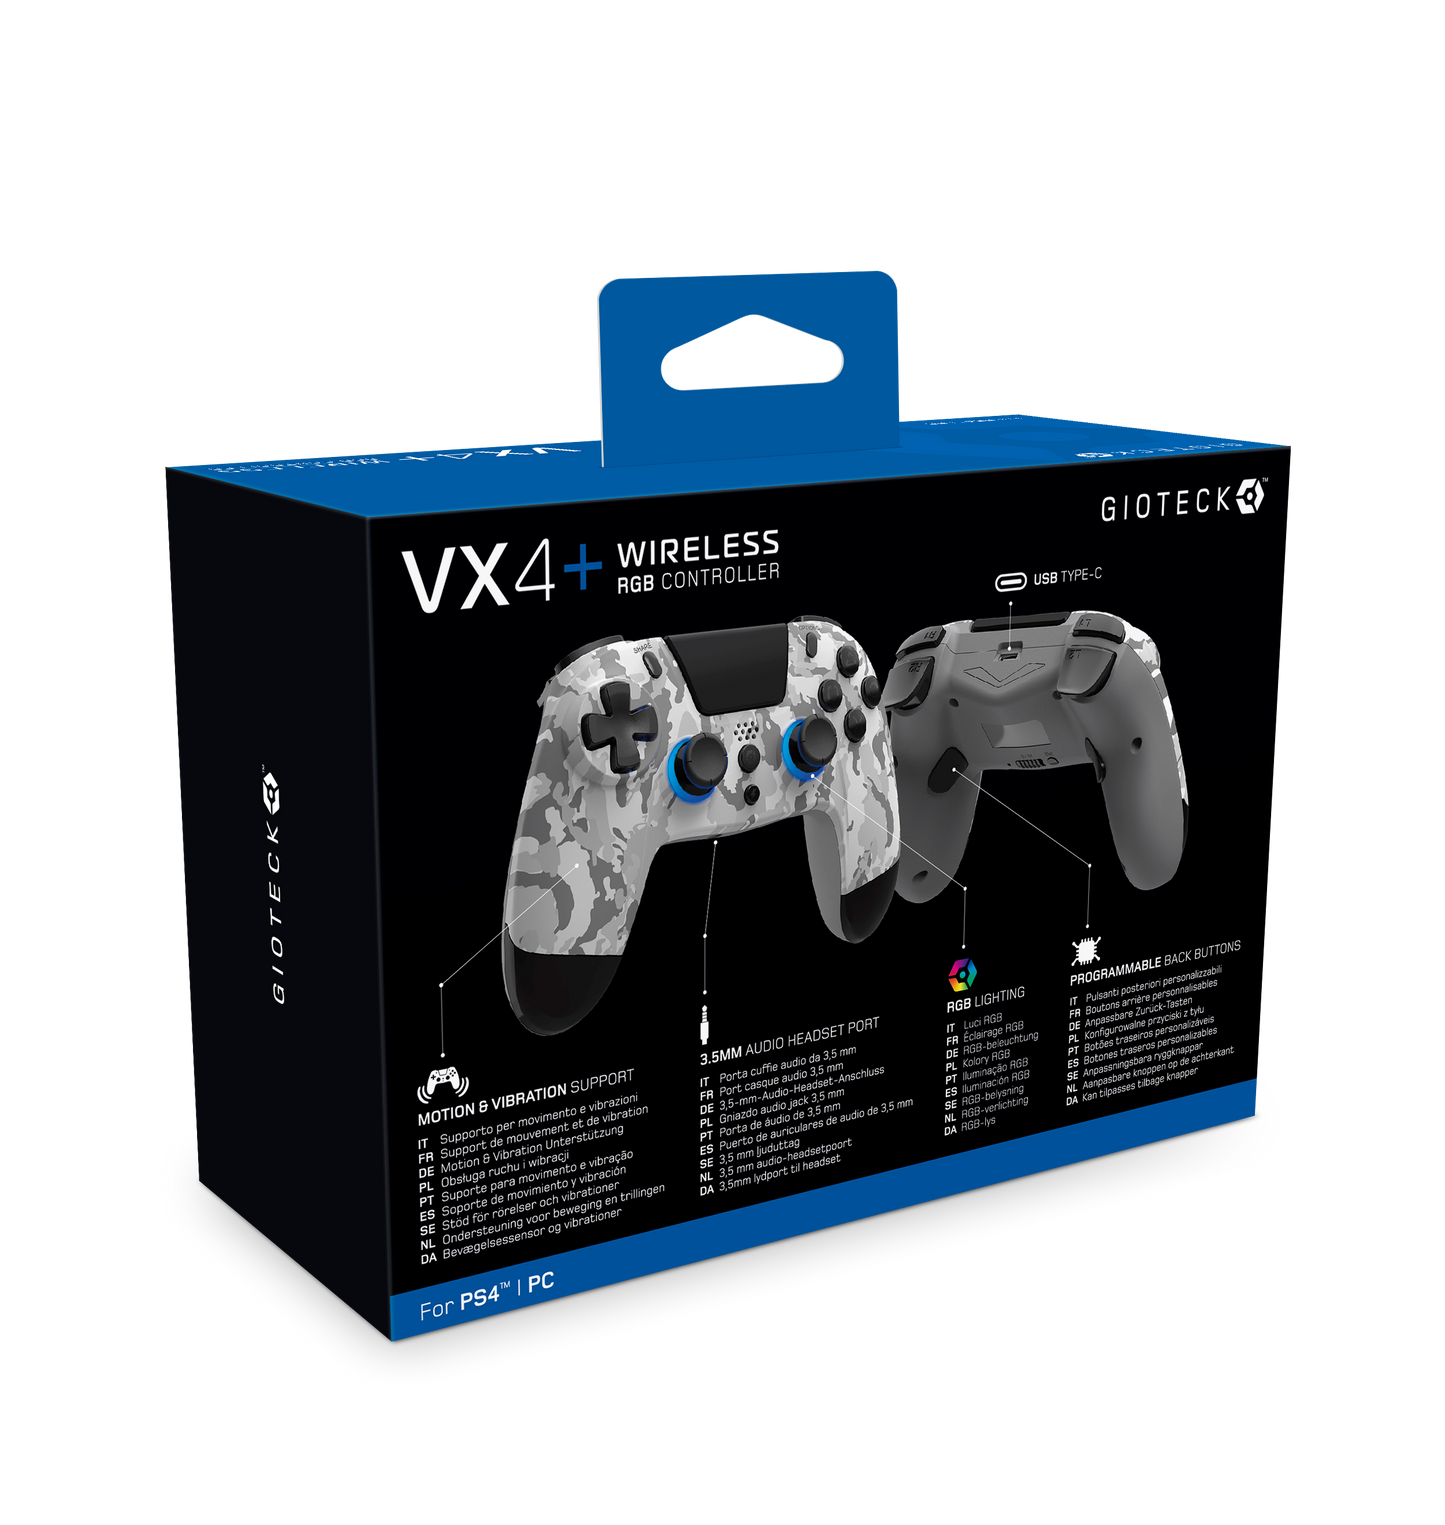 VX4+ Wireless Controller for PS4 PC Light Camo